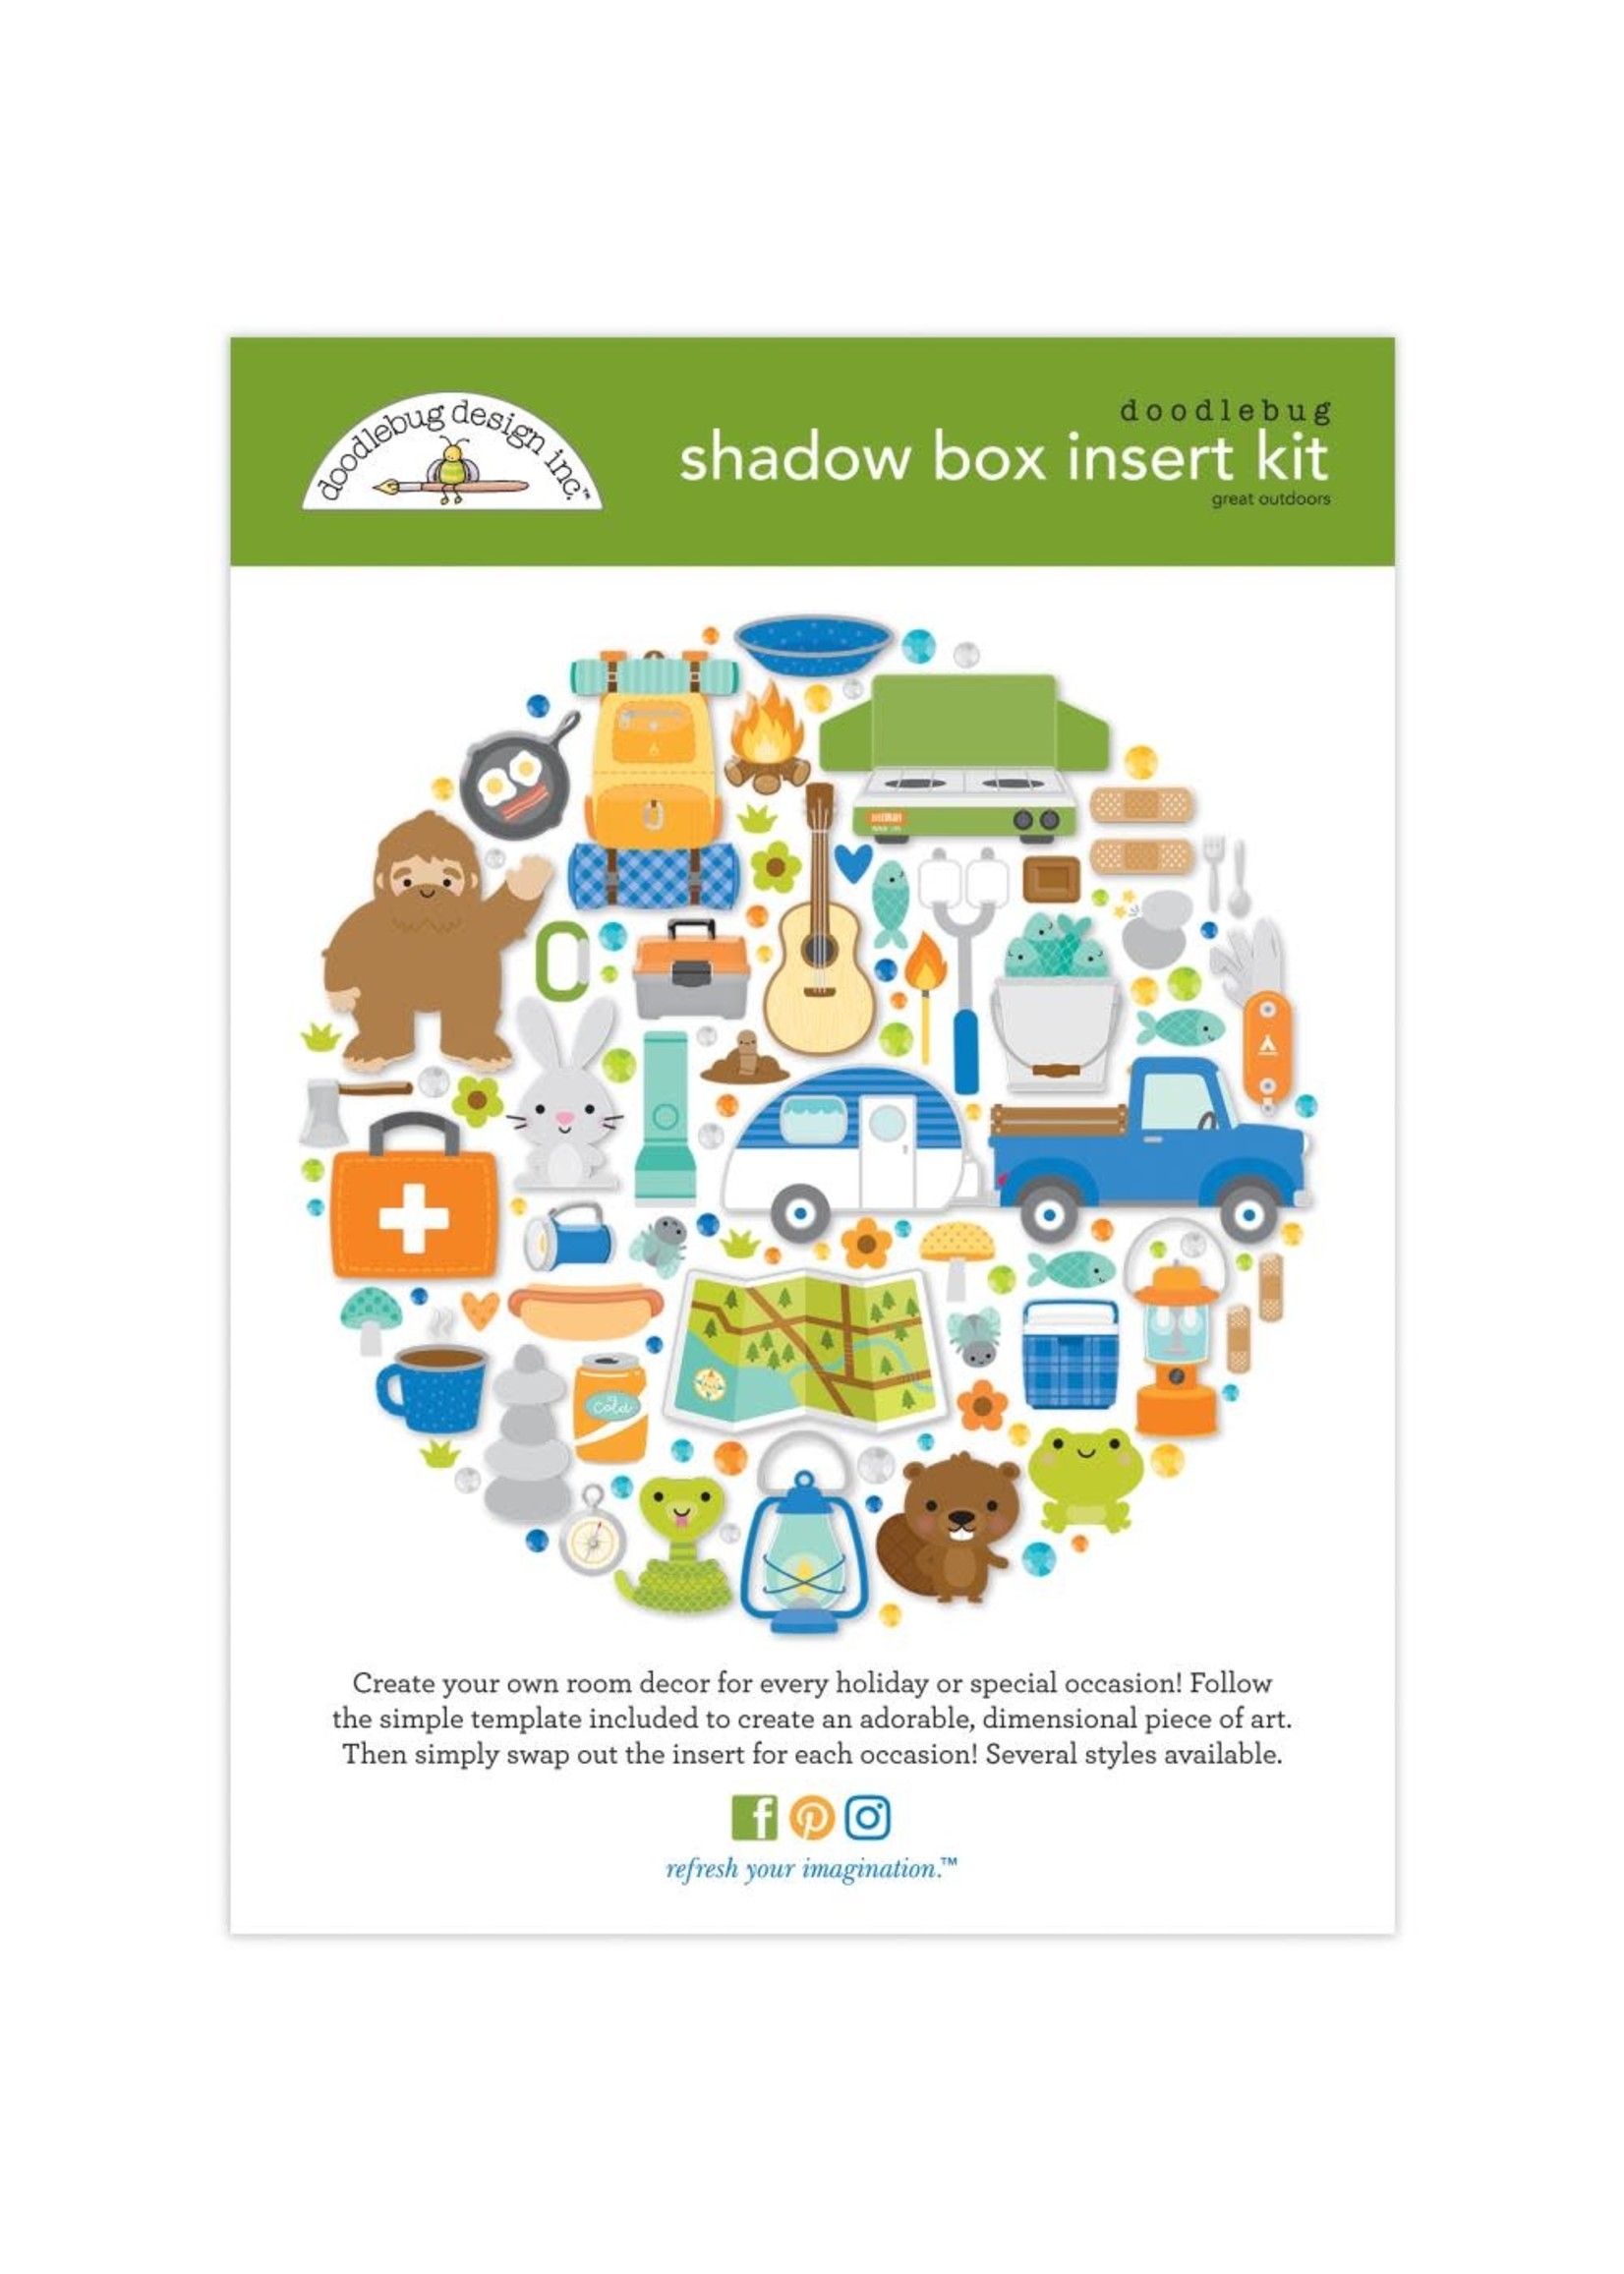 DOODLEBUG Great Outdoors Shadow Box Insert Kit